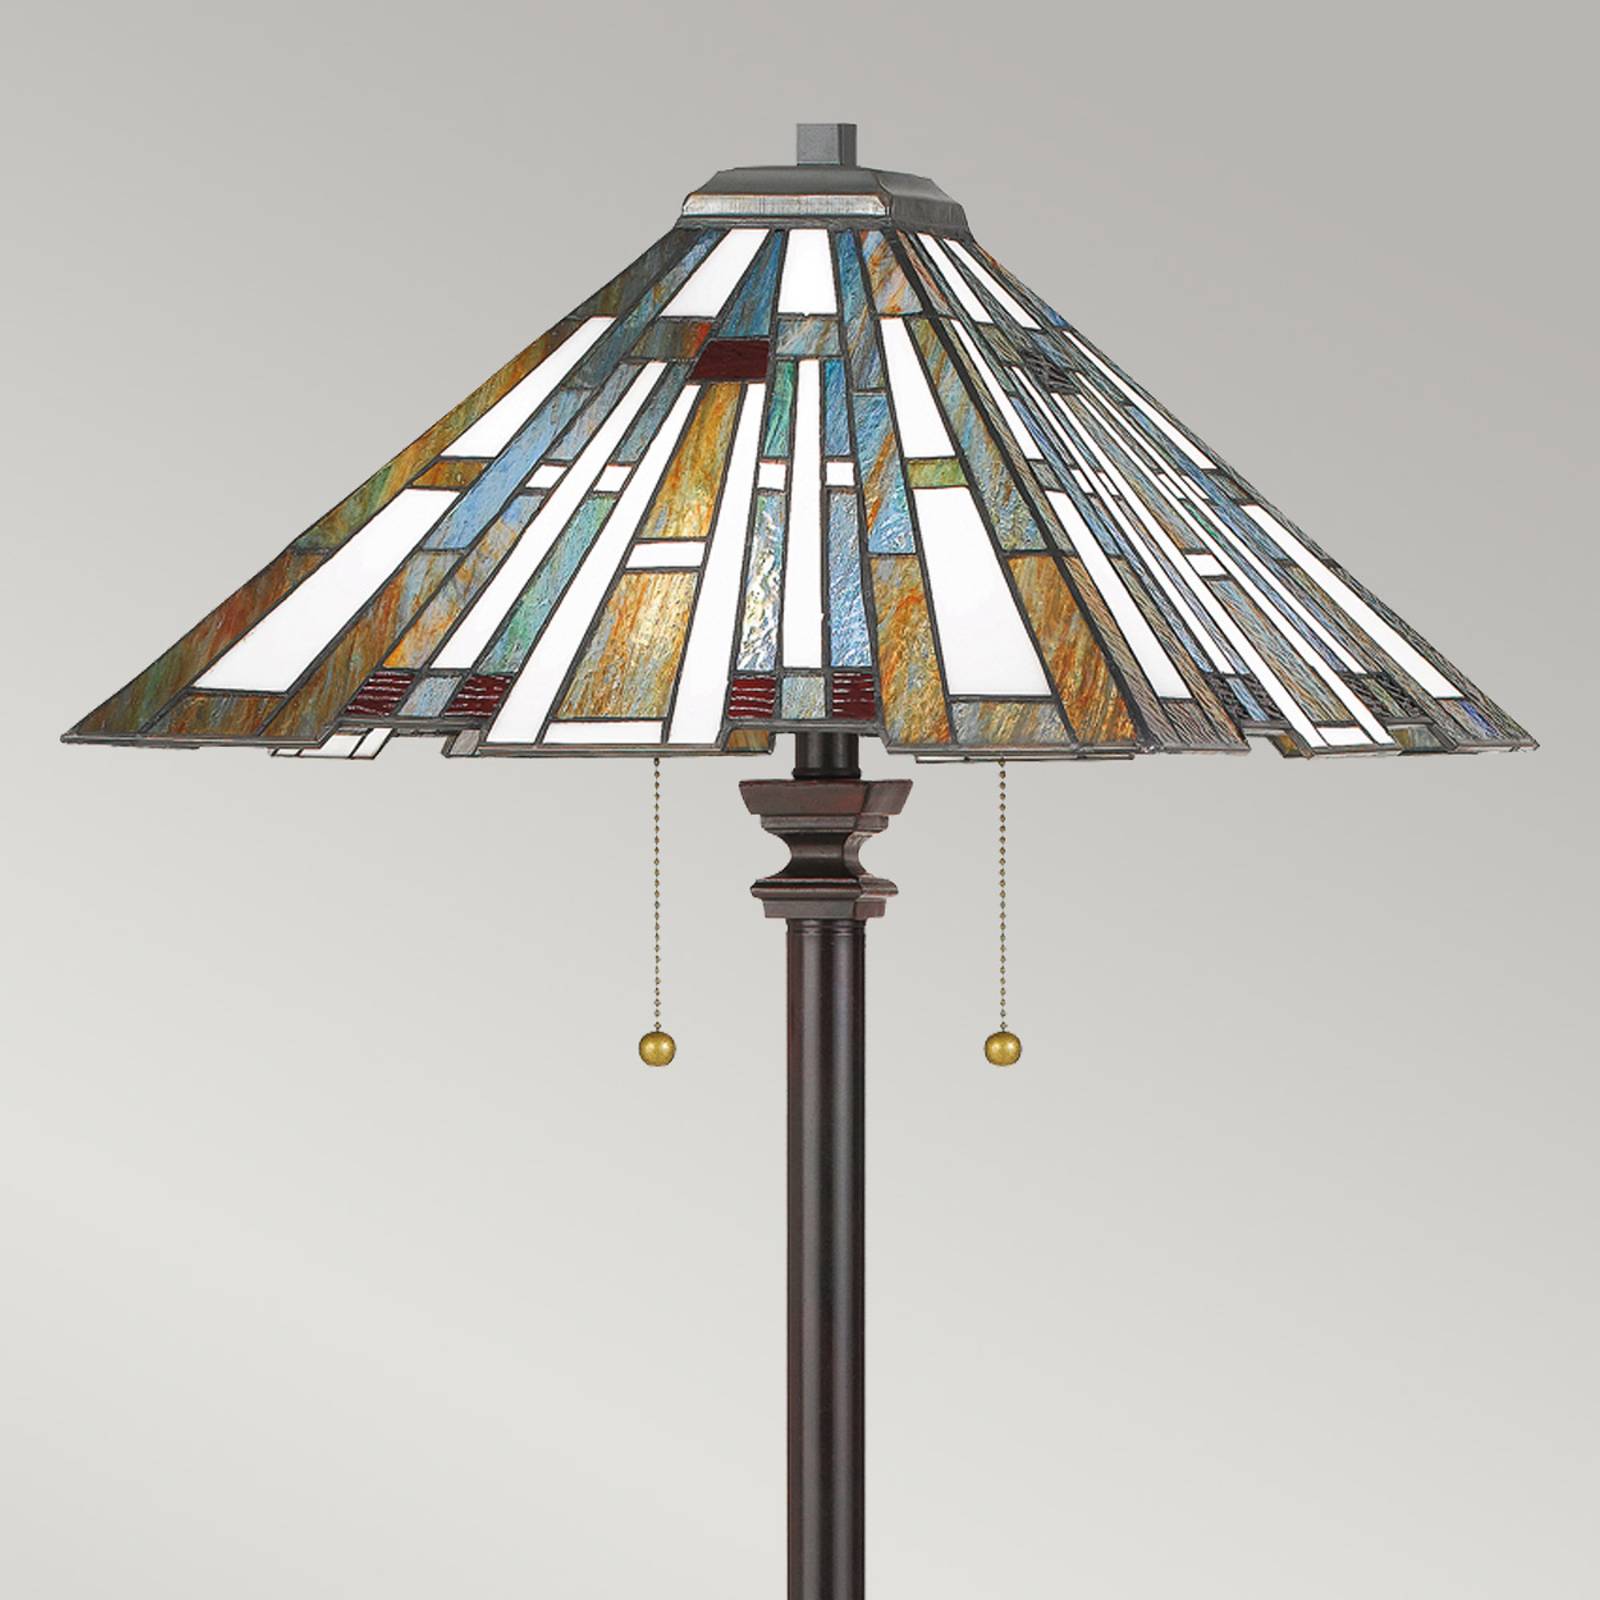 QUOIZEL Maybeck Tiffany style floor lamp